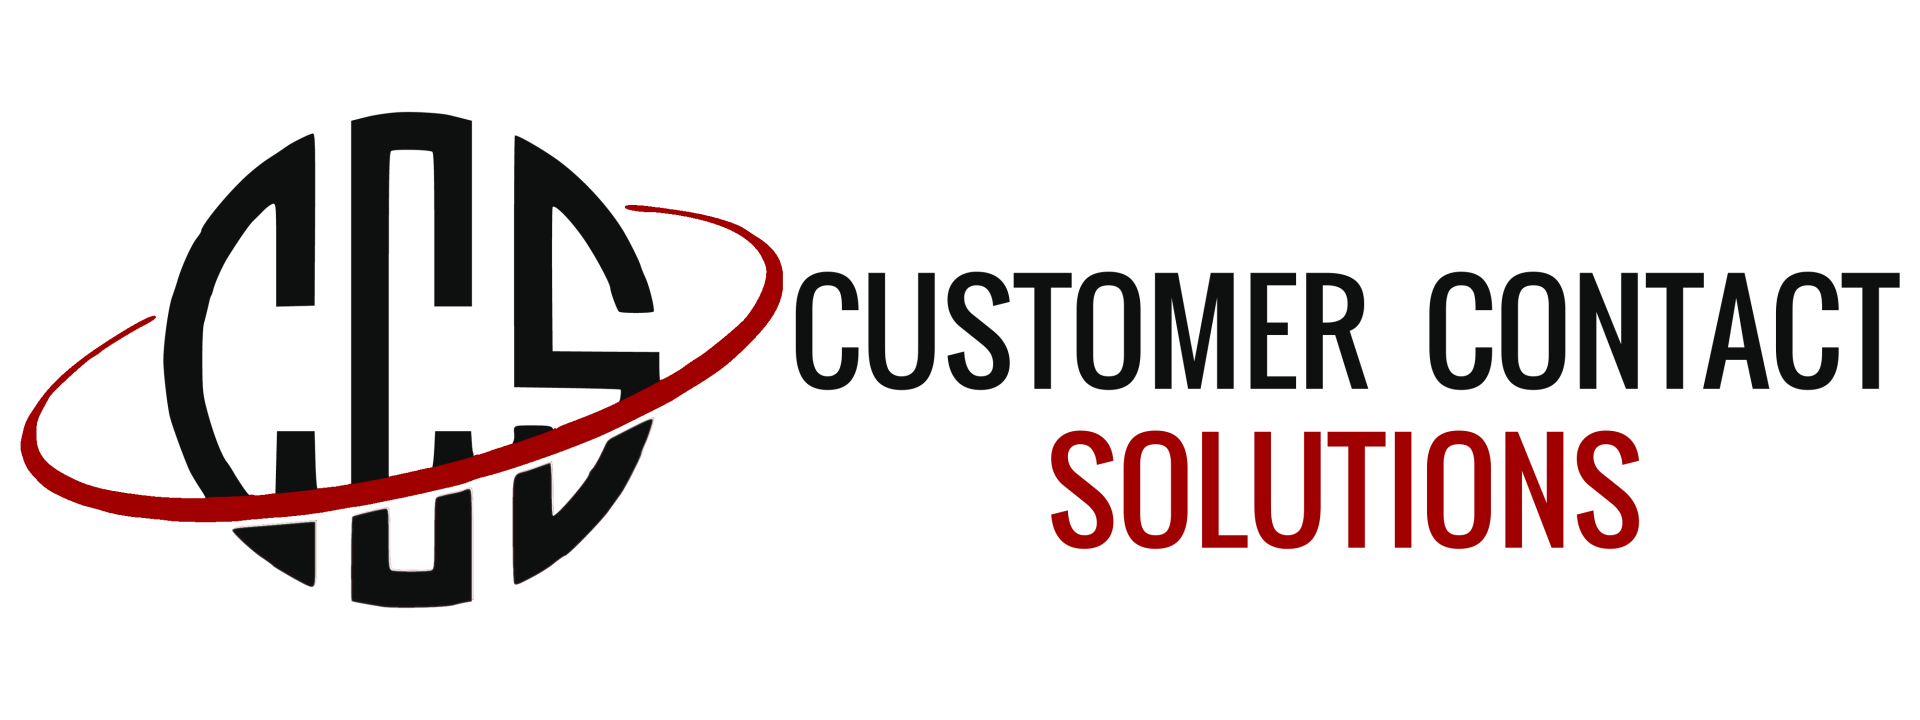 Customer Contact Solutions  Web Design & Marketing